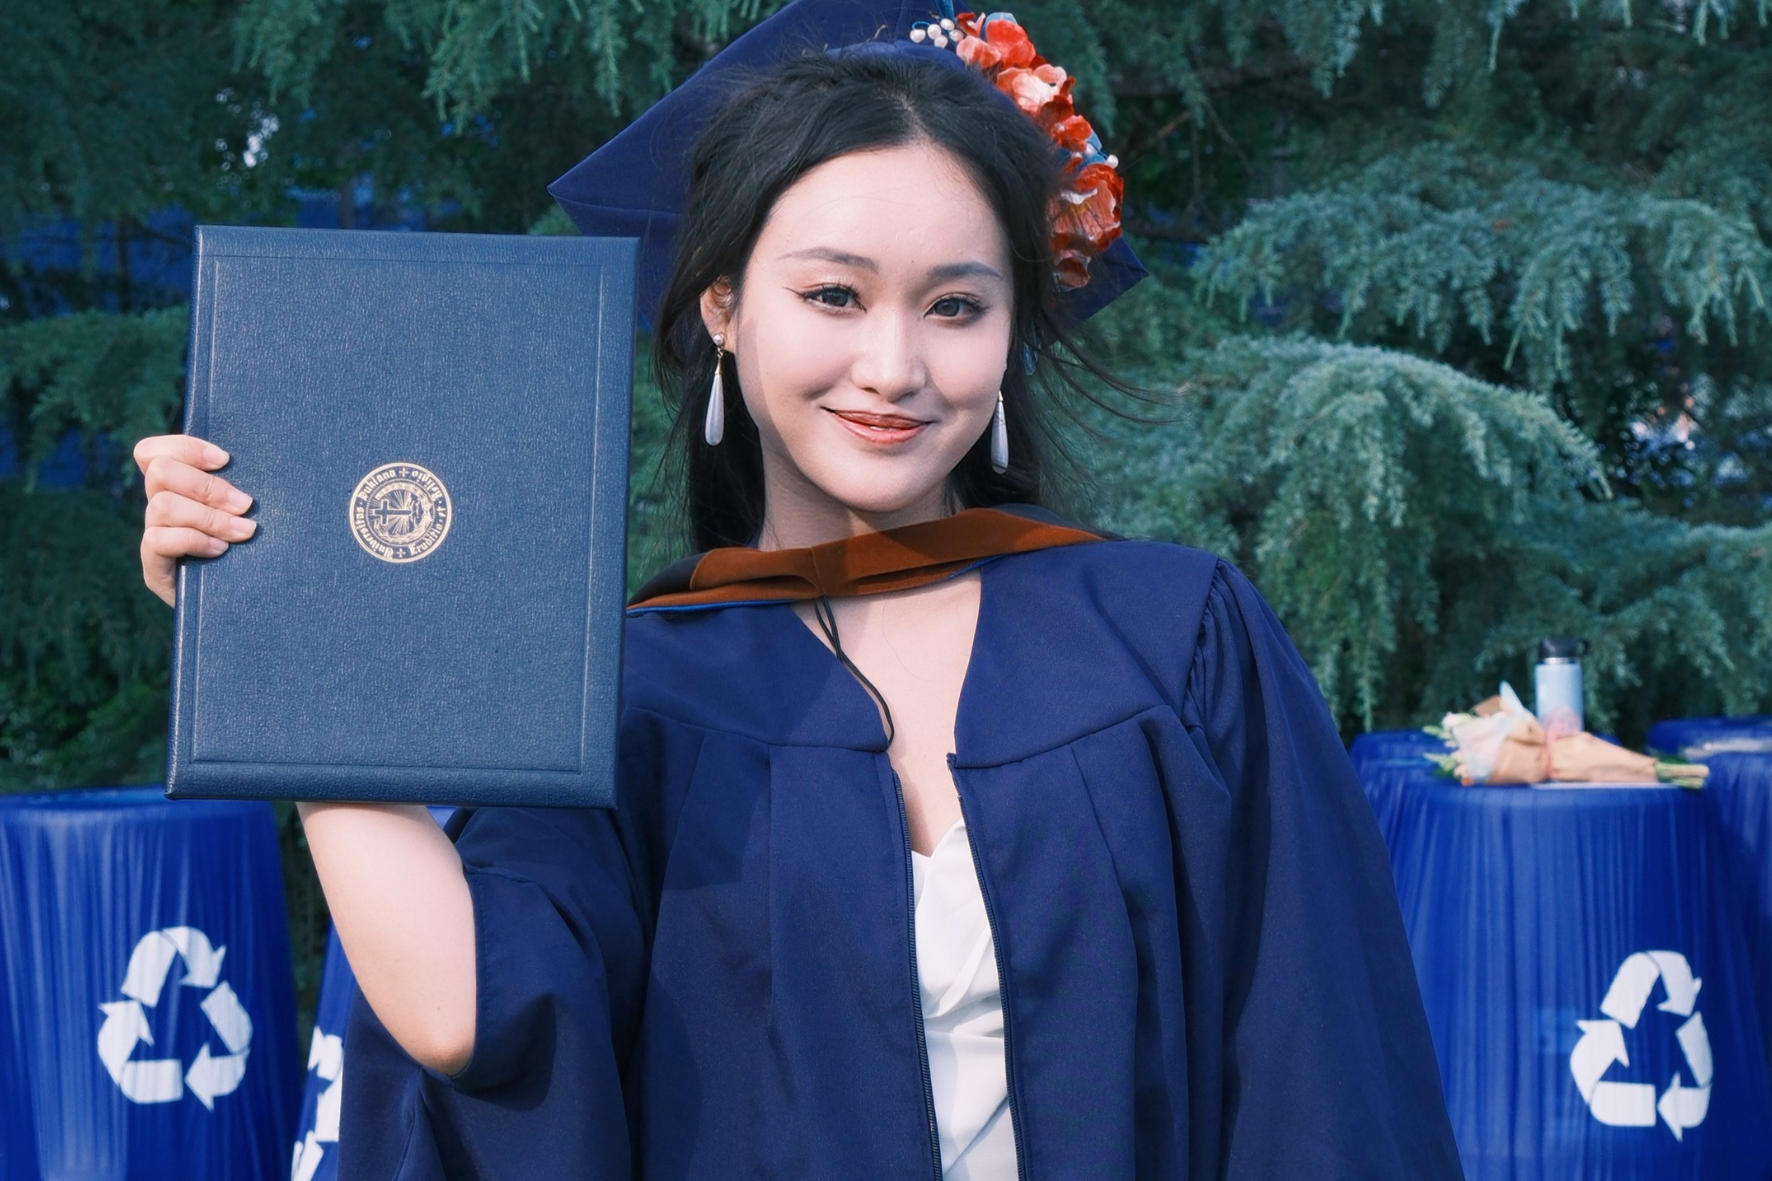  Dwellworks intern Yao Yao on graduation day